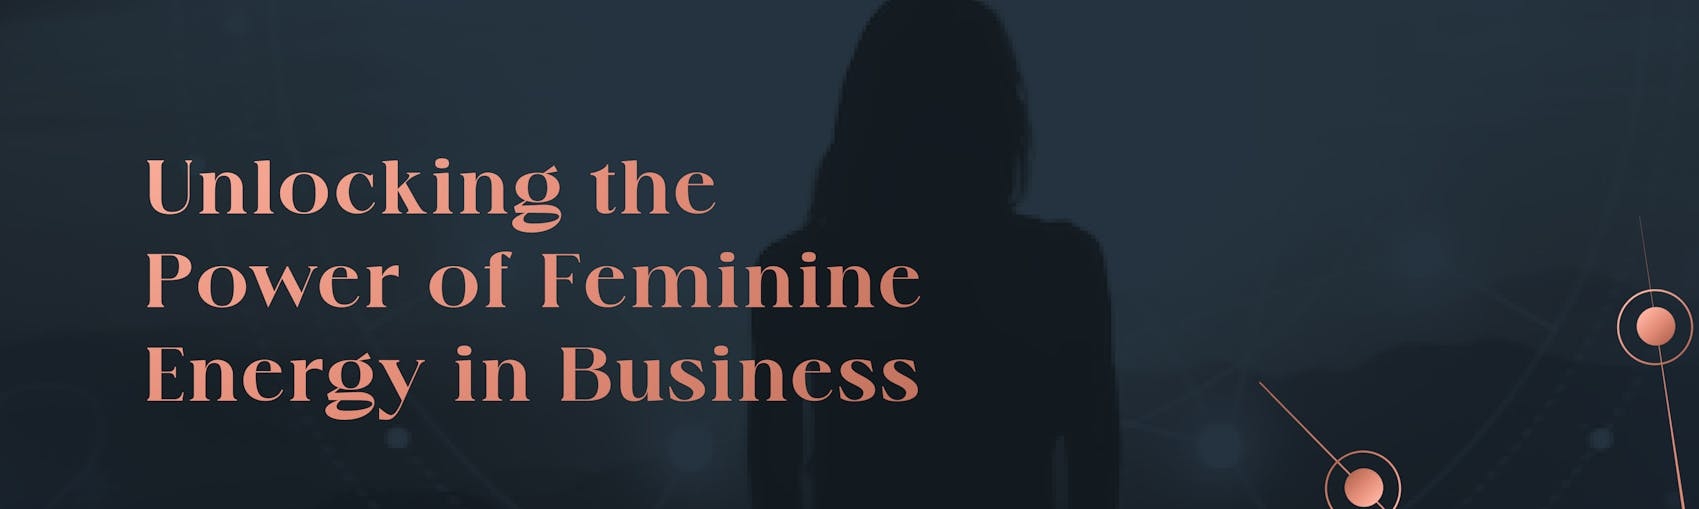 Erin Patten - Unlocking the Power of Feminine Energy in Business